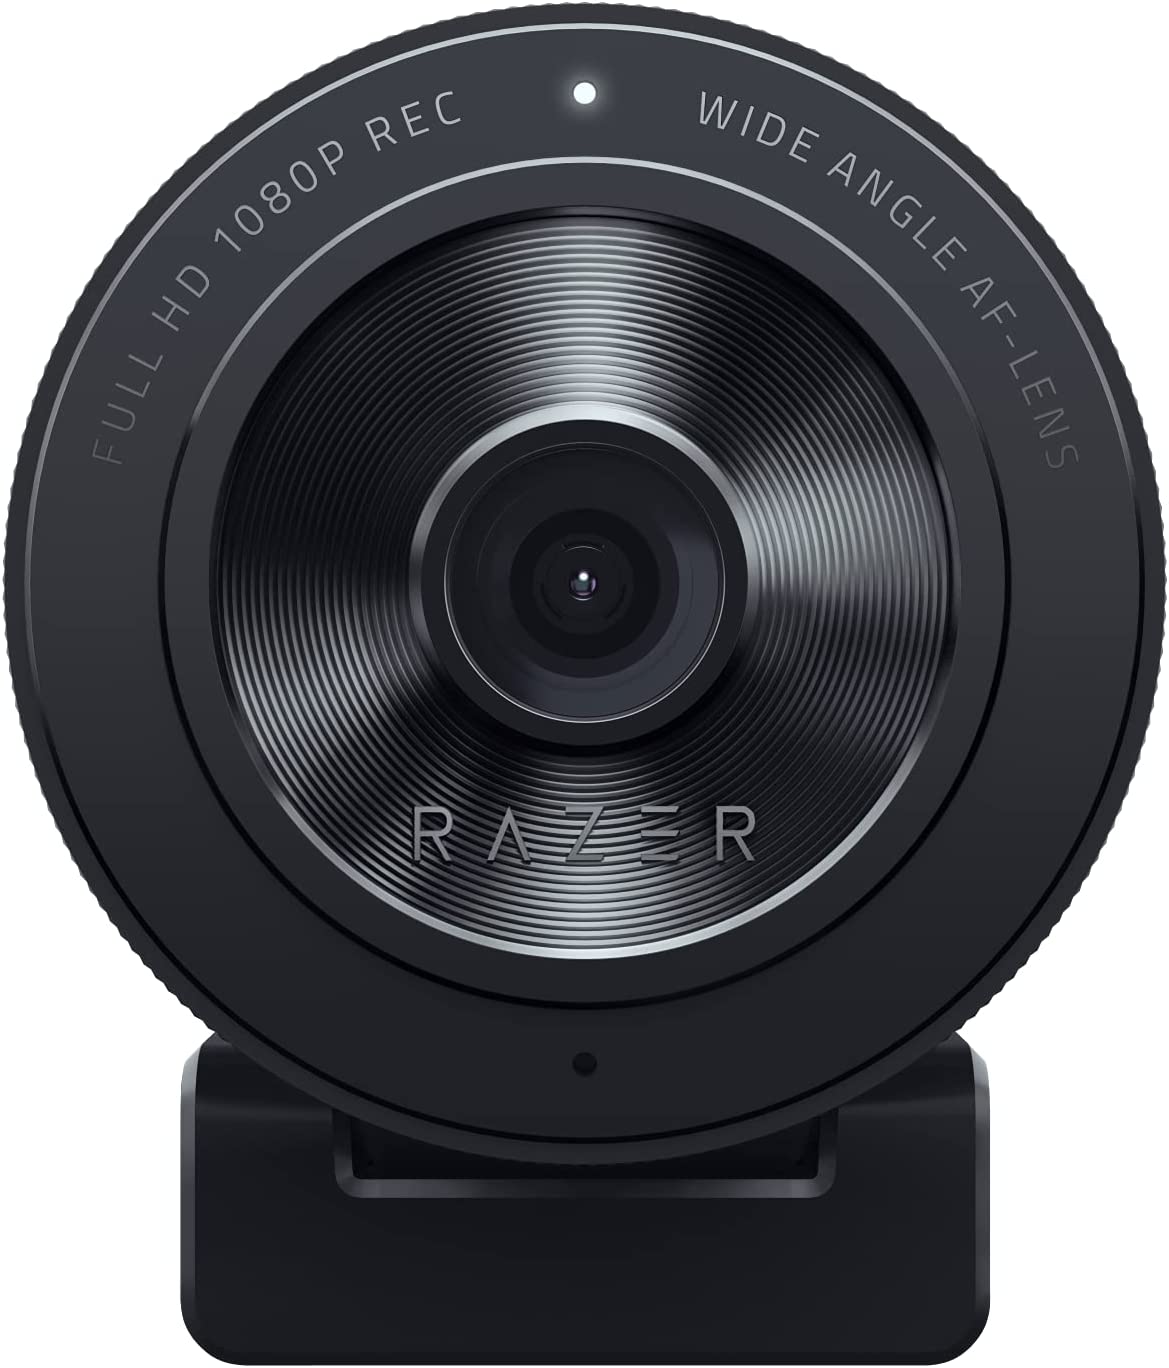 وب کم ریزر Razer Kiyo X Full HD Streaming Webcam - ارسال ۱۰ الی ۱۵ روز کاری